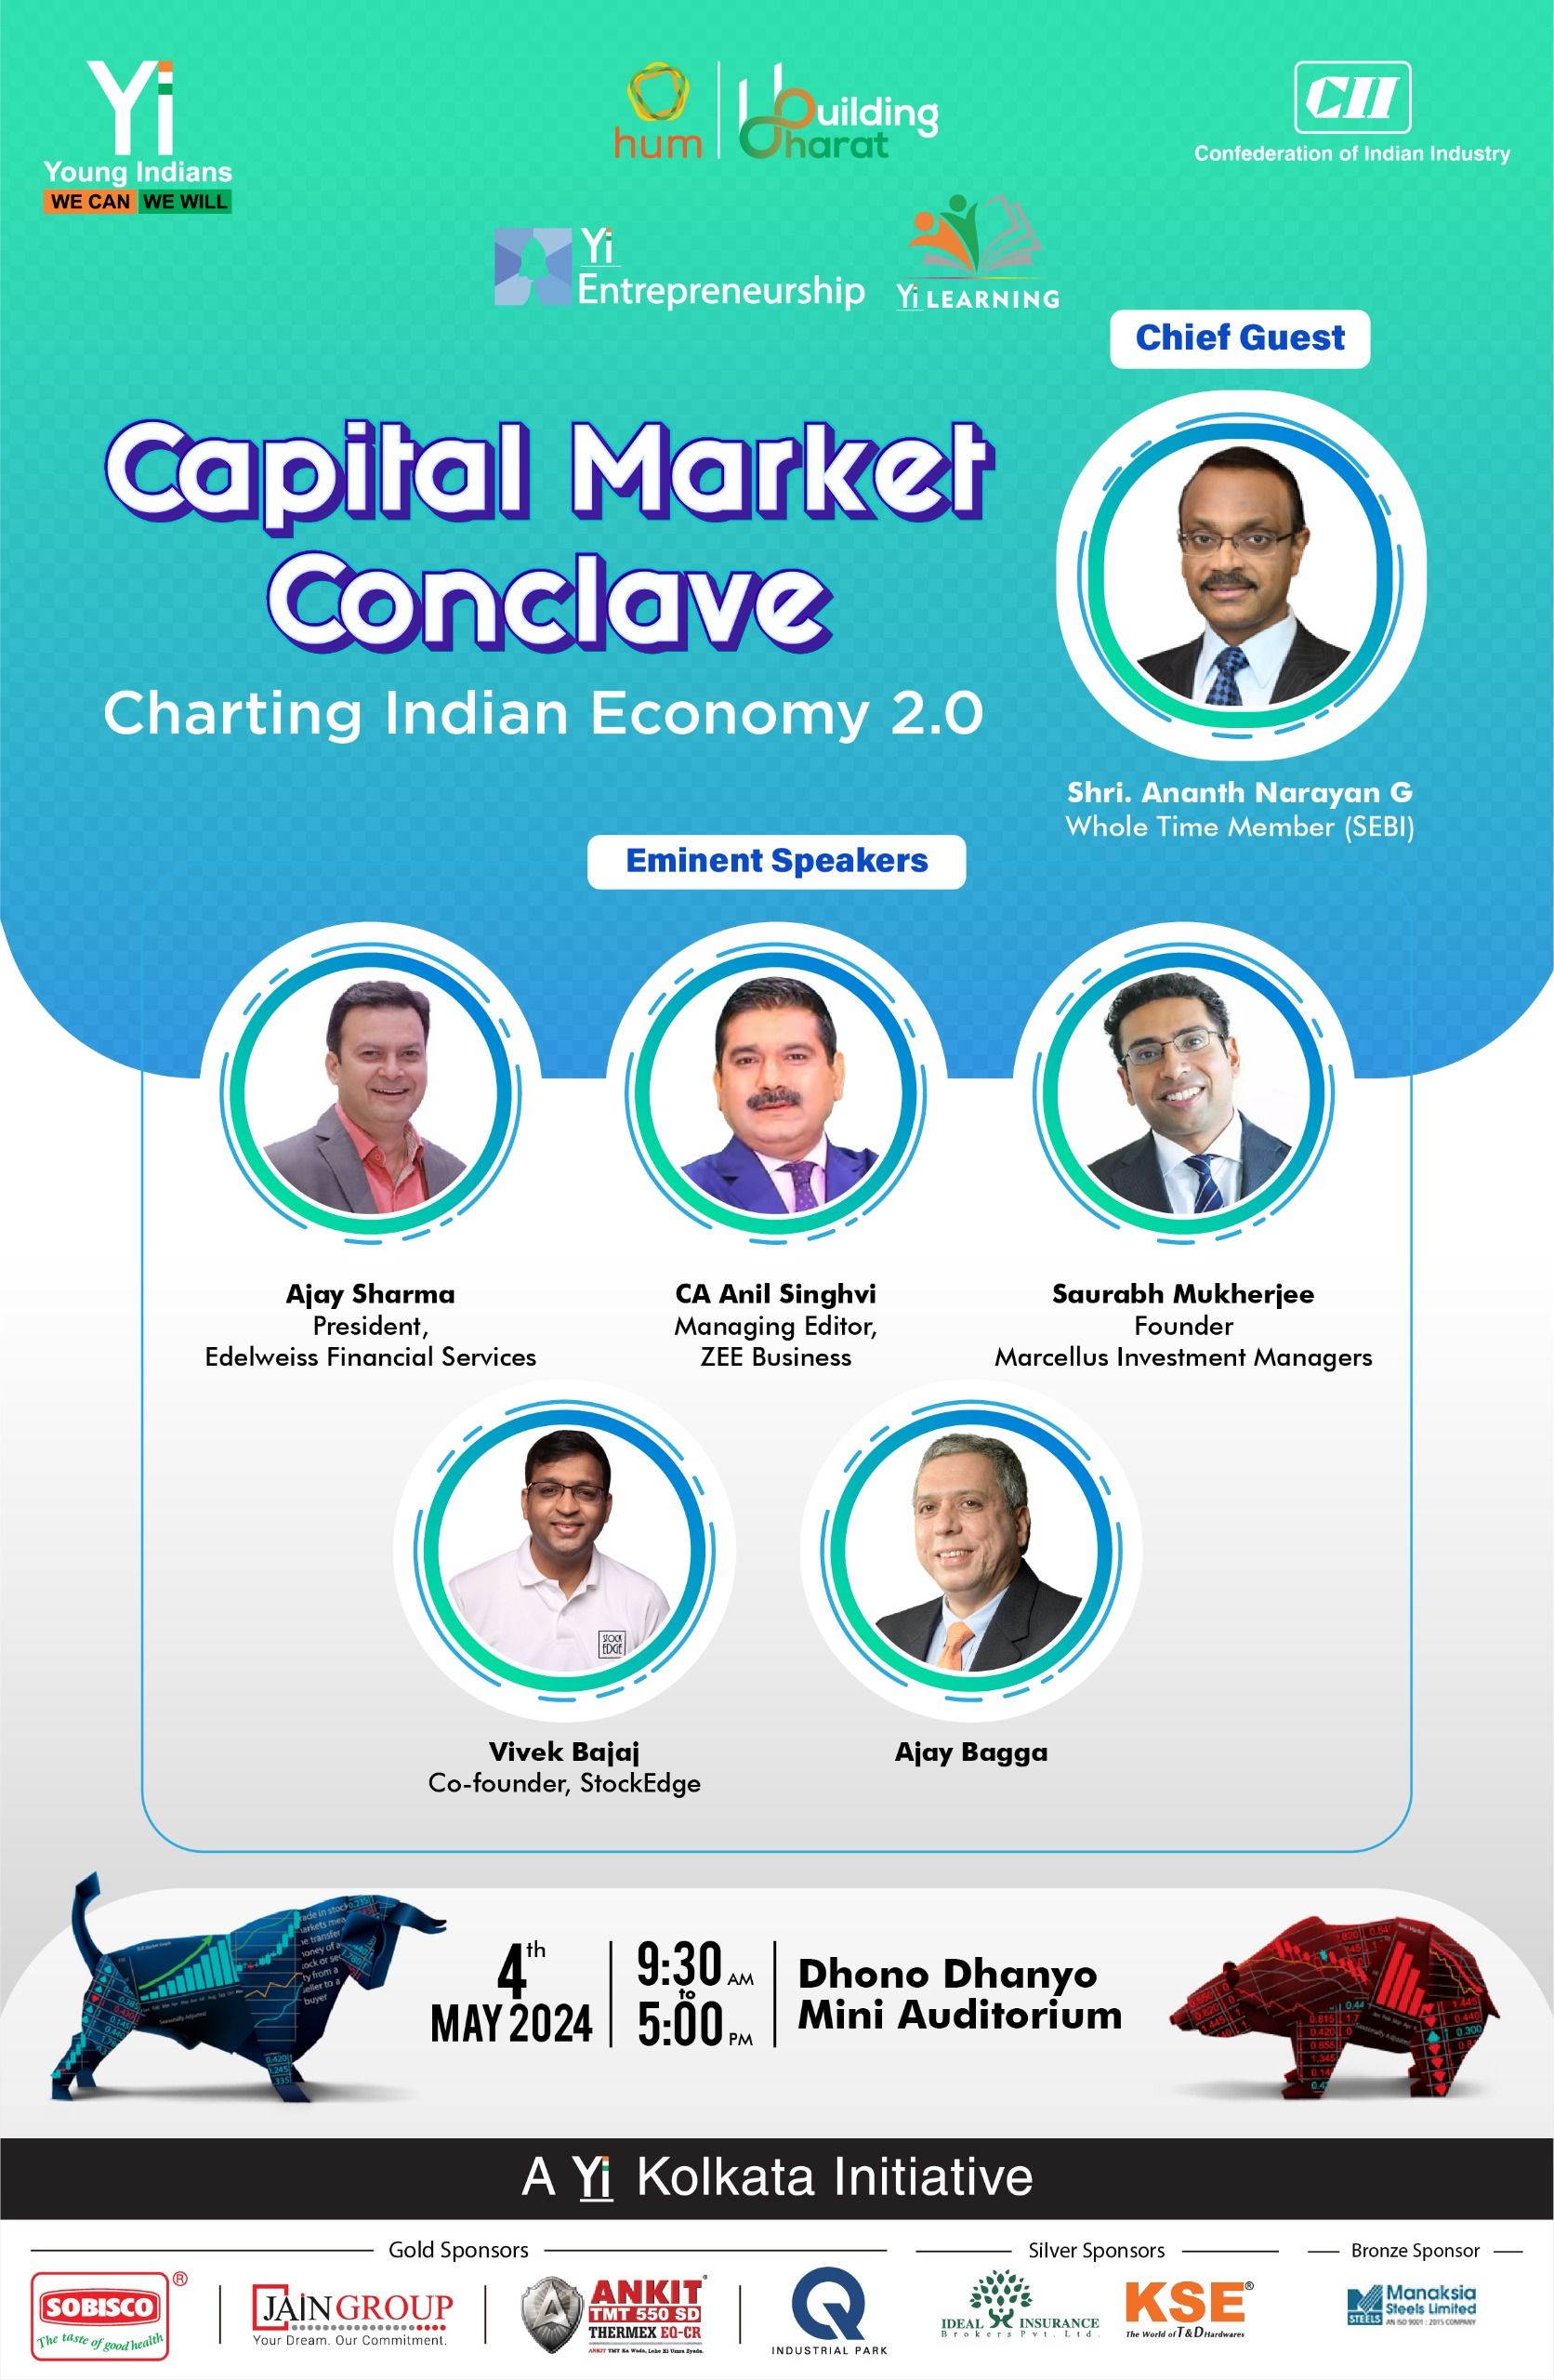 Yi24 | Capital Market Conclave